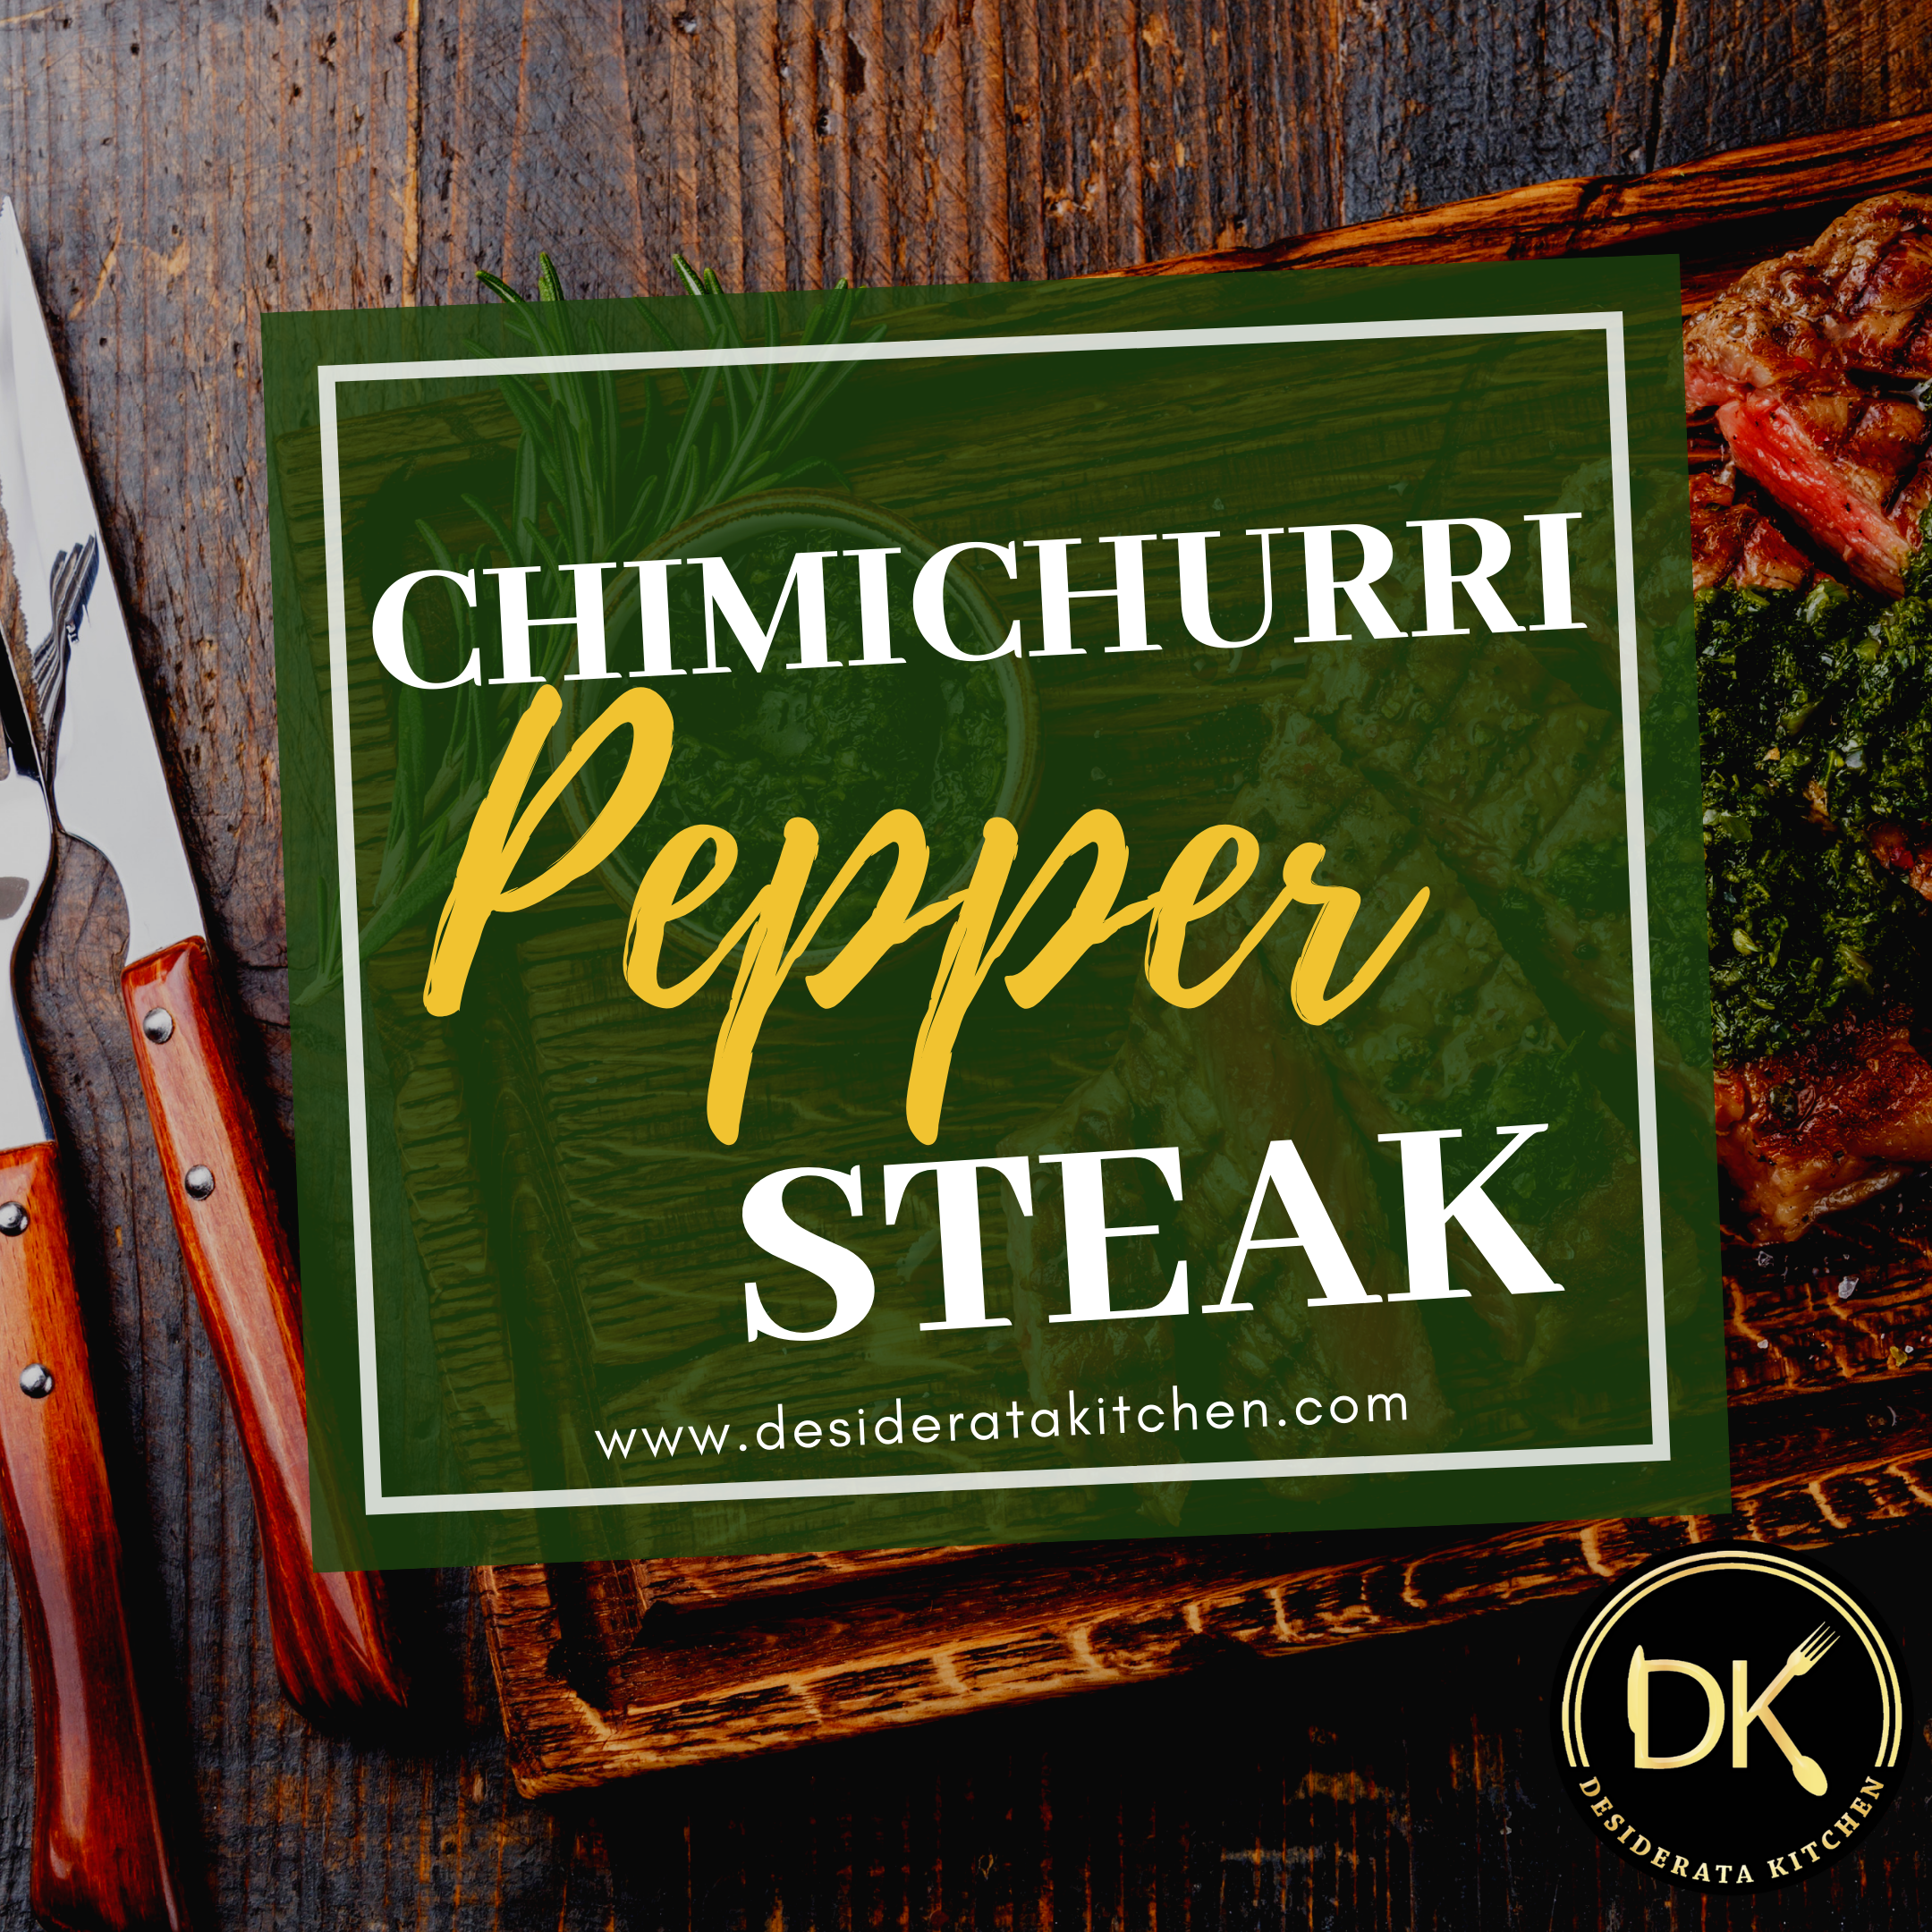 Chimichurri Pepper Steak